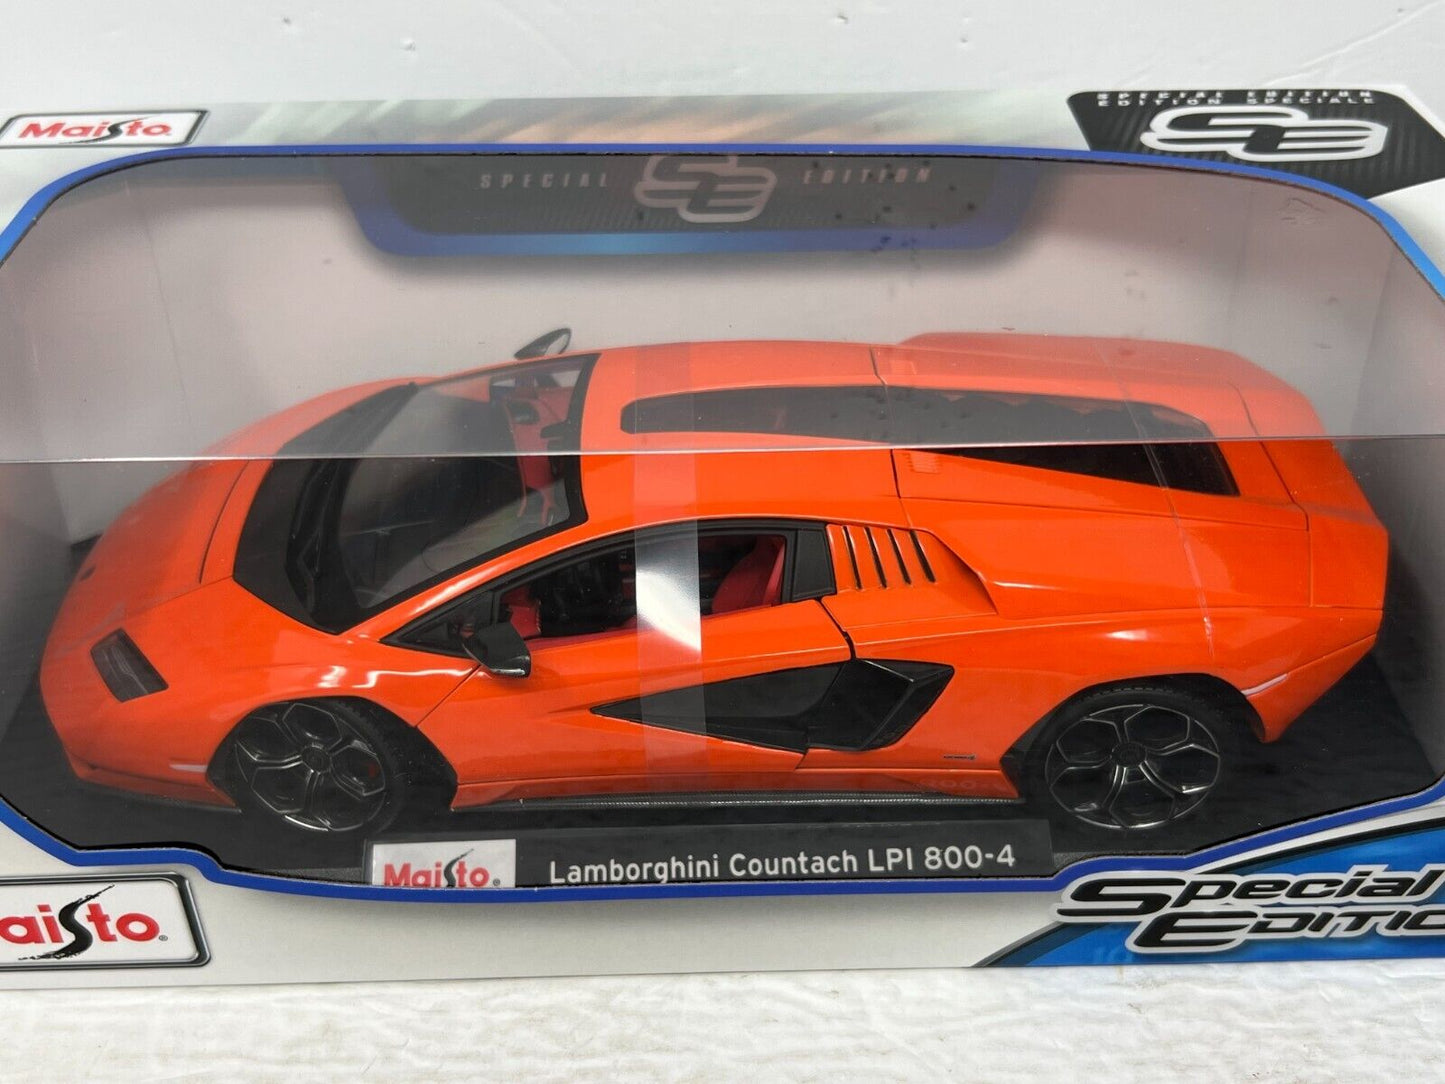 Maisto Lamborghini Countach LPI 800-4 Special Edition 1:18 Diecast